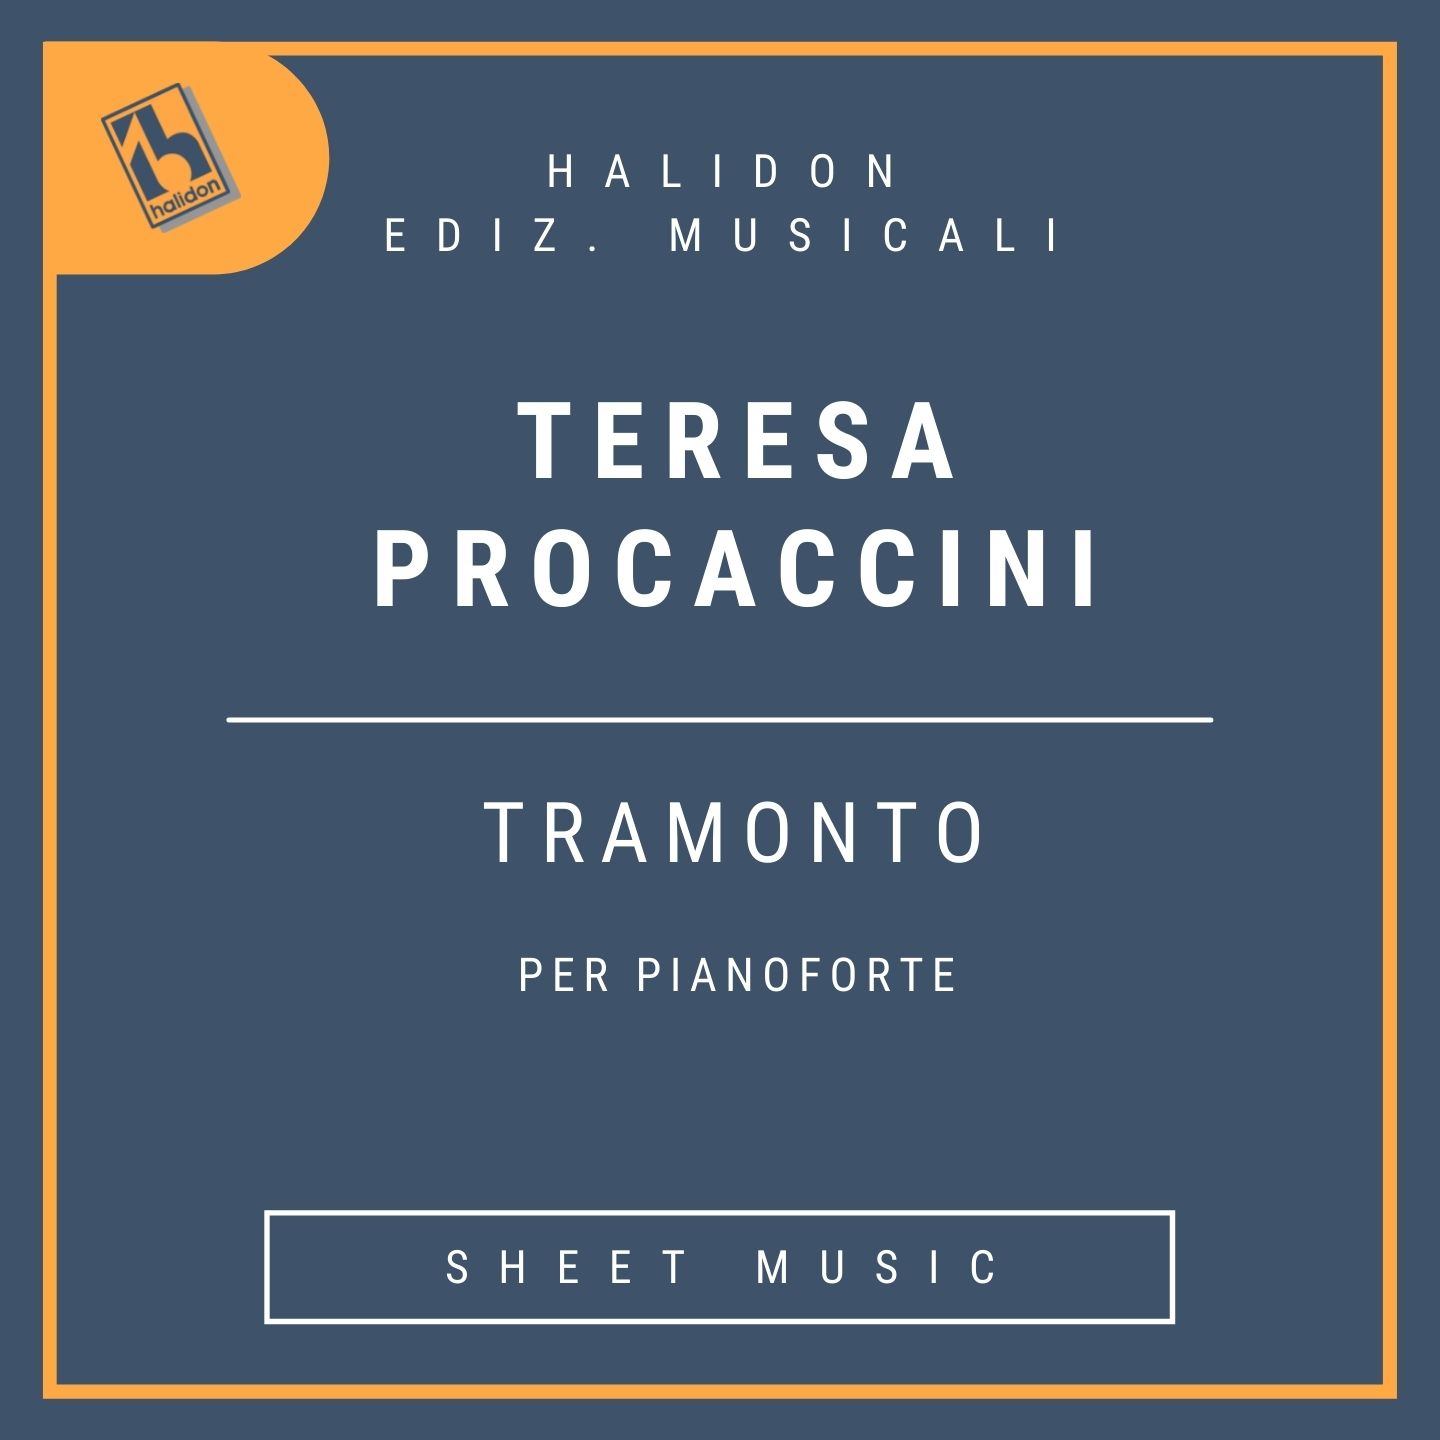 Teresa Procaccini - Tramonto